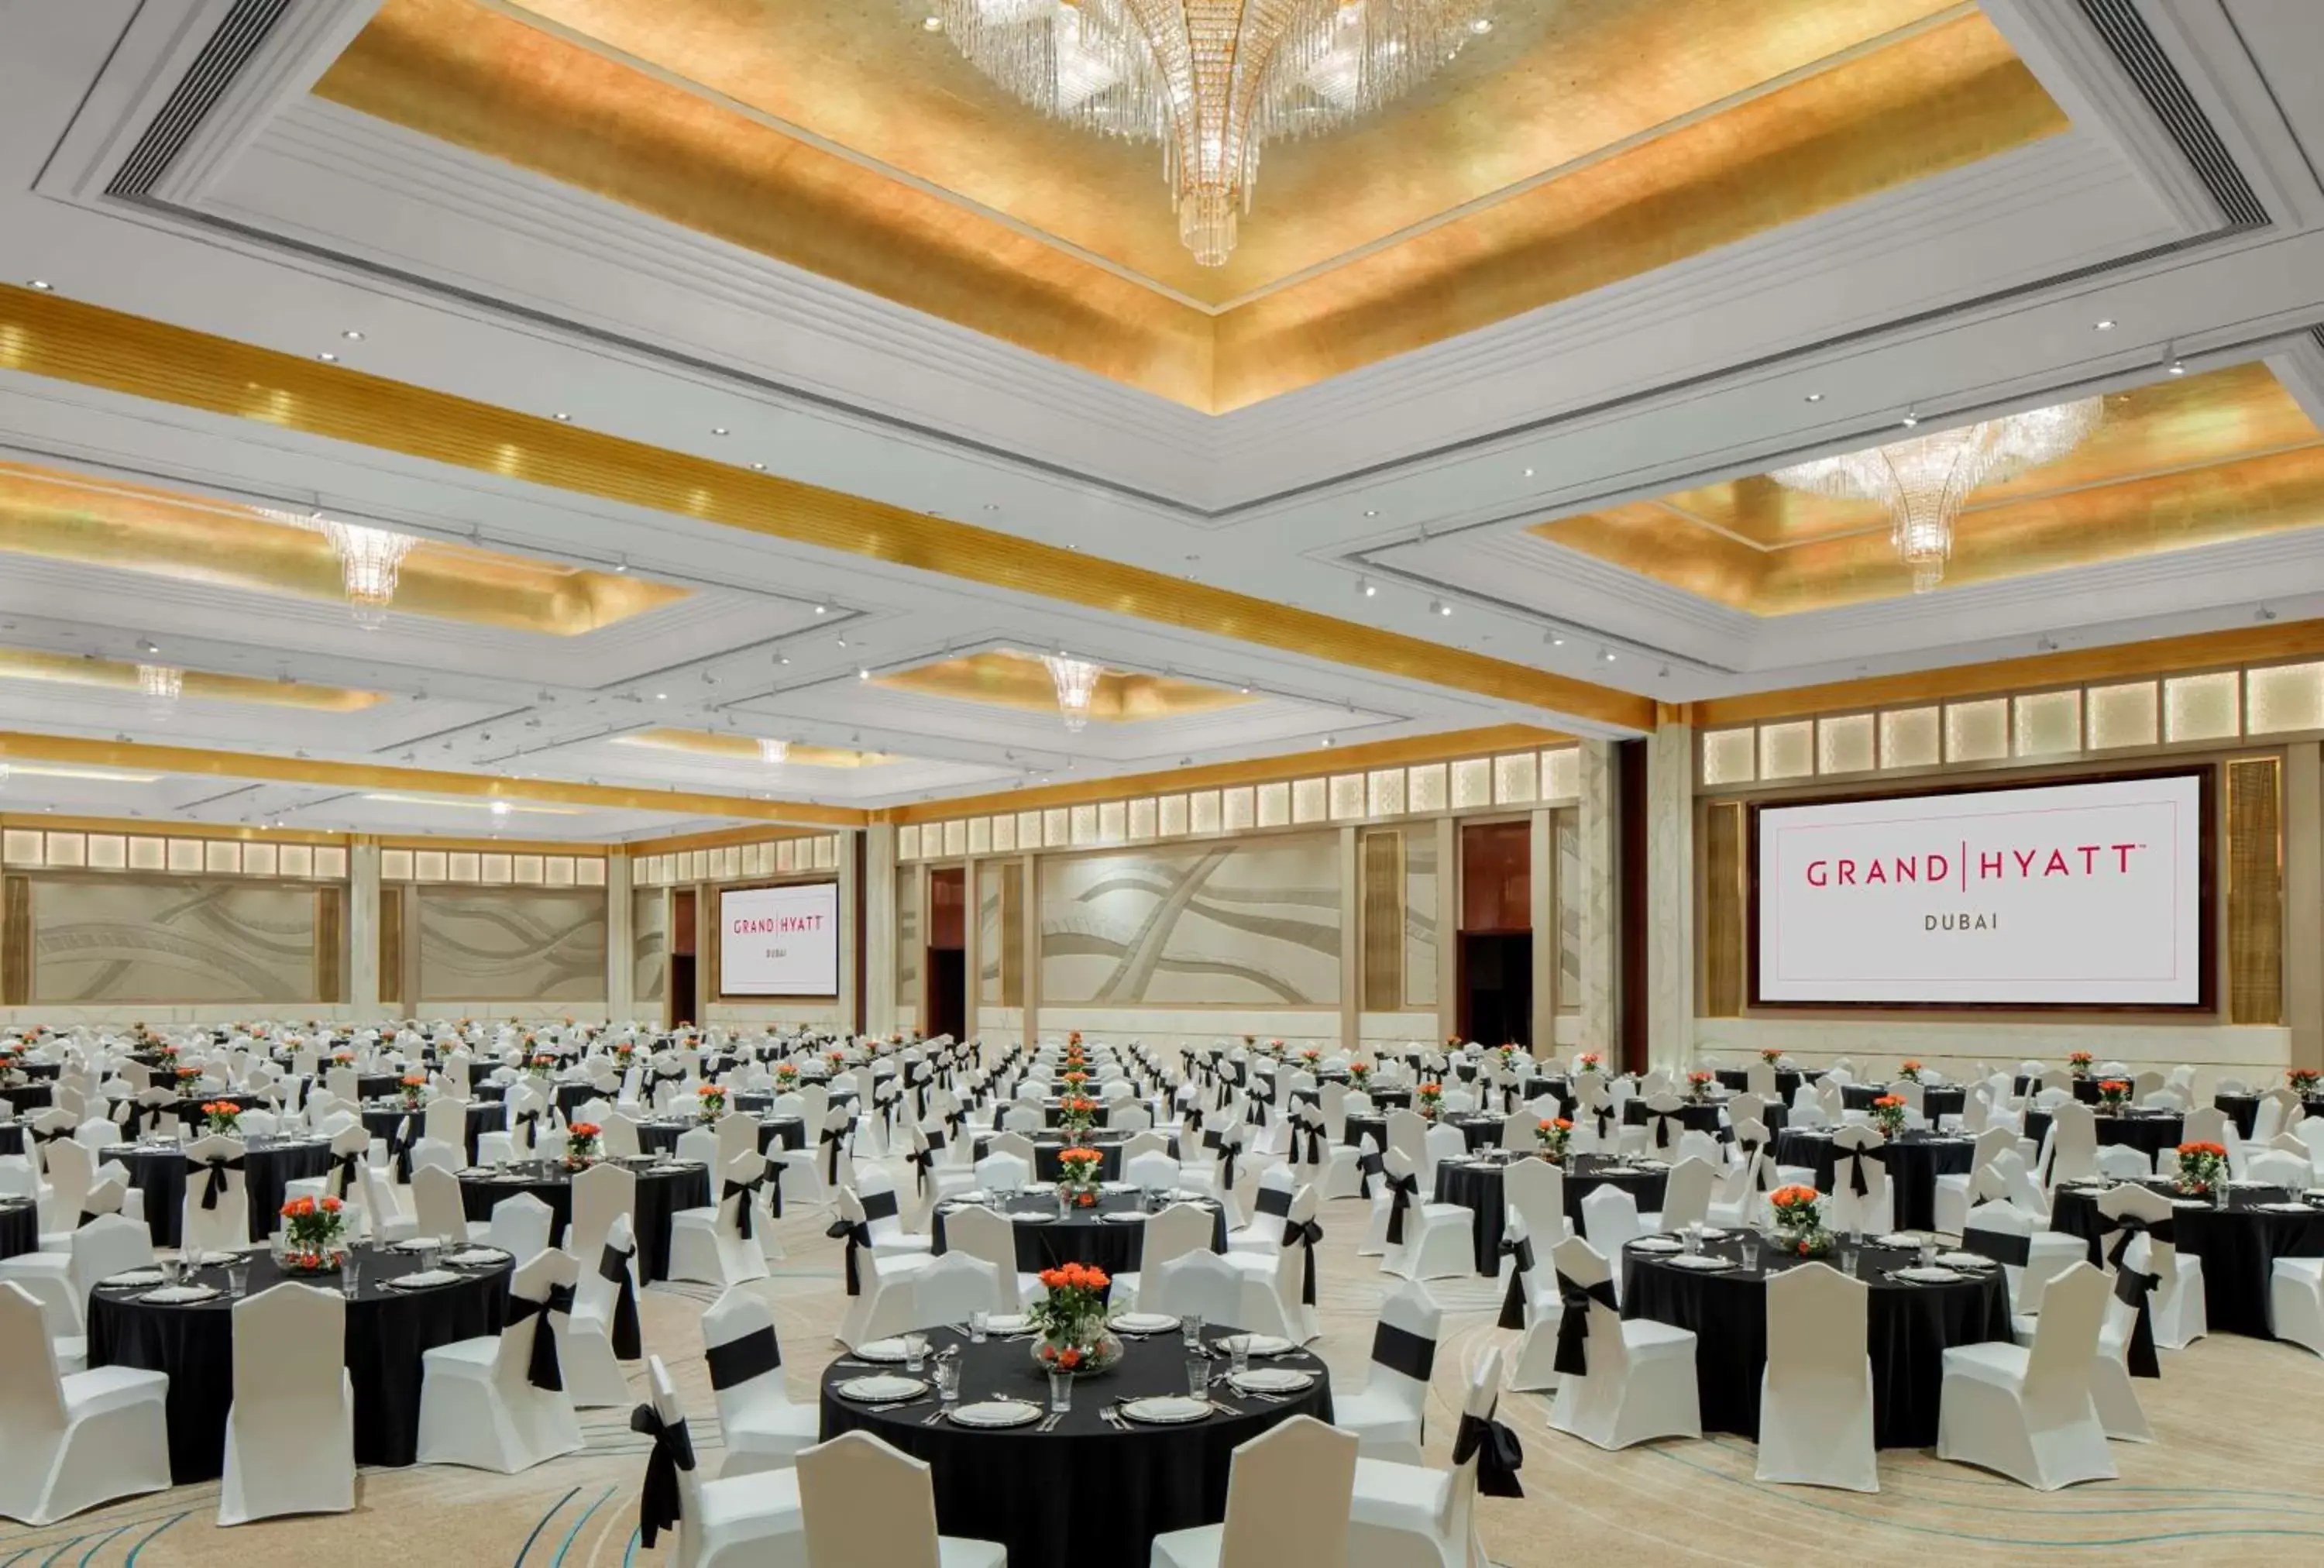 On site, Banquet Facilities in Grand Hyatt Dubai